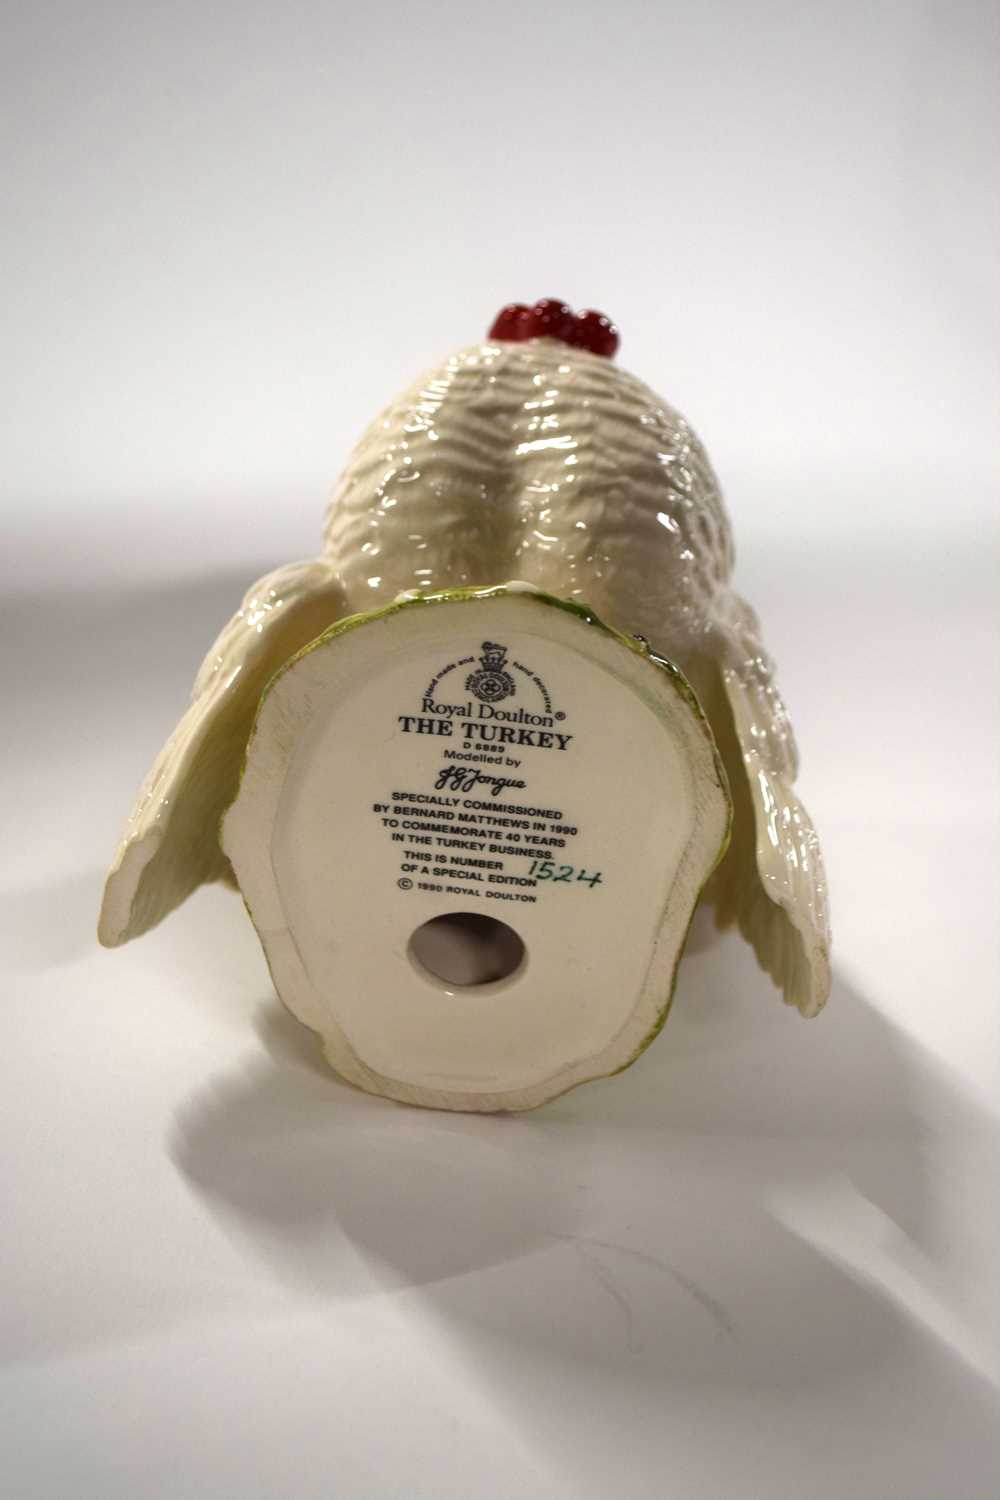 Royal Doulton Bernard Matthews Turkey - White Version - with cerificate and box. - Image 3 of 3